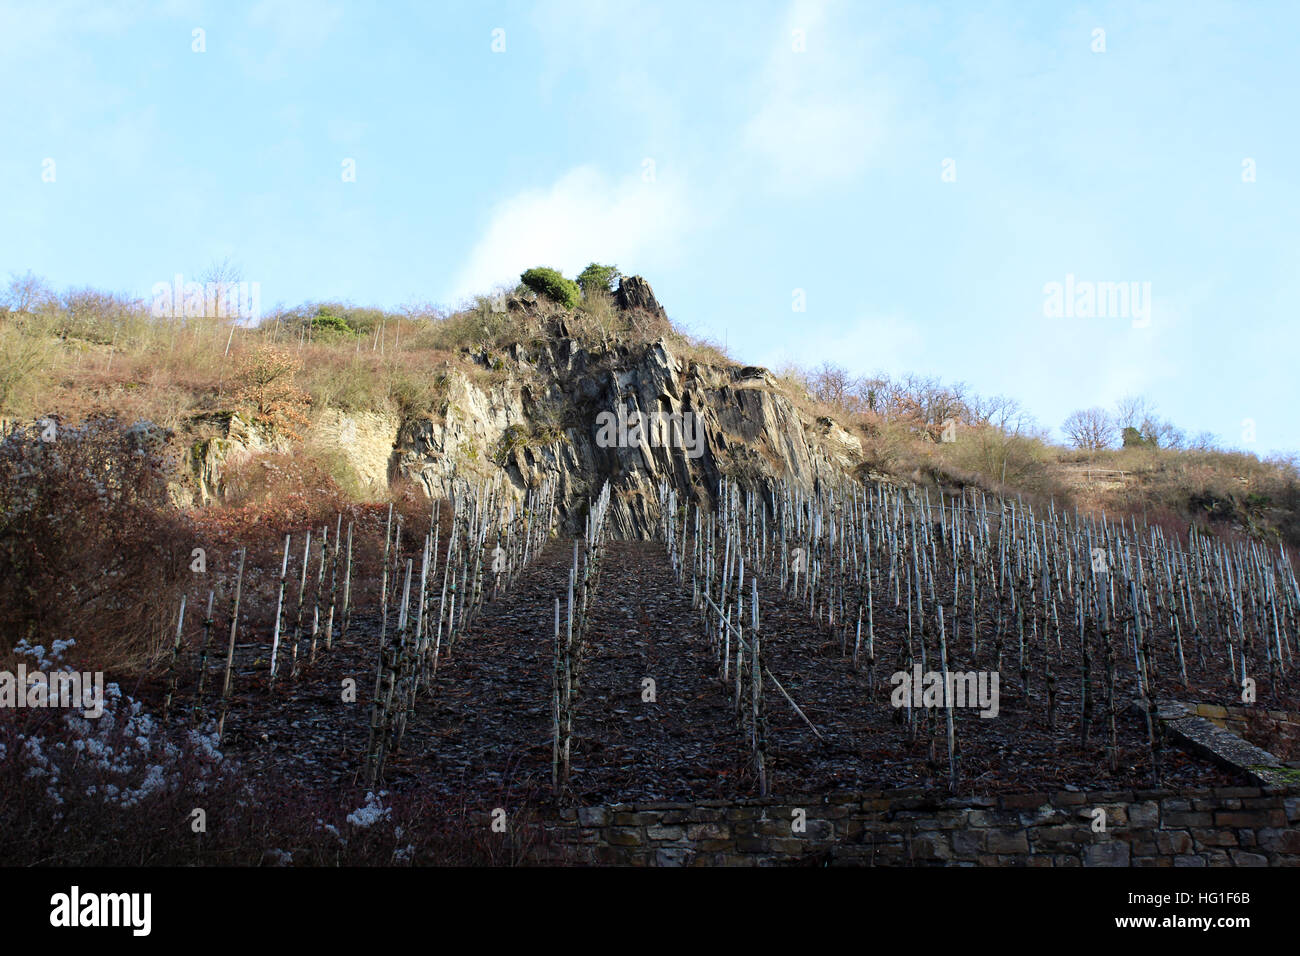 Vineyards at Beilstein, Germany Stock Photo